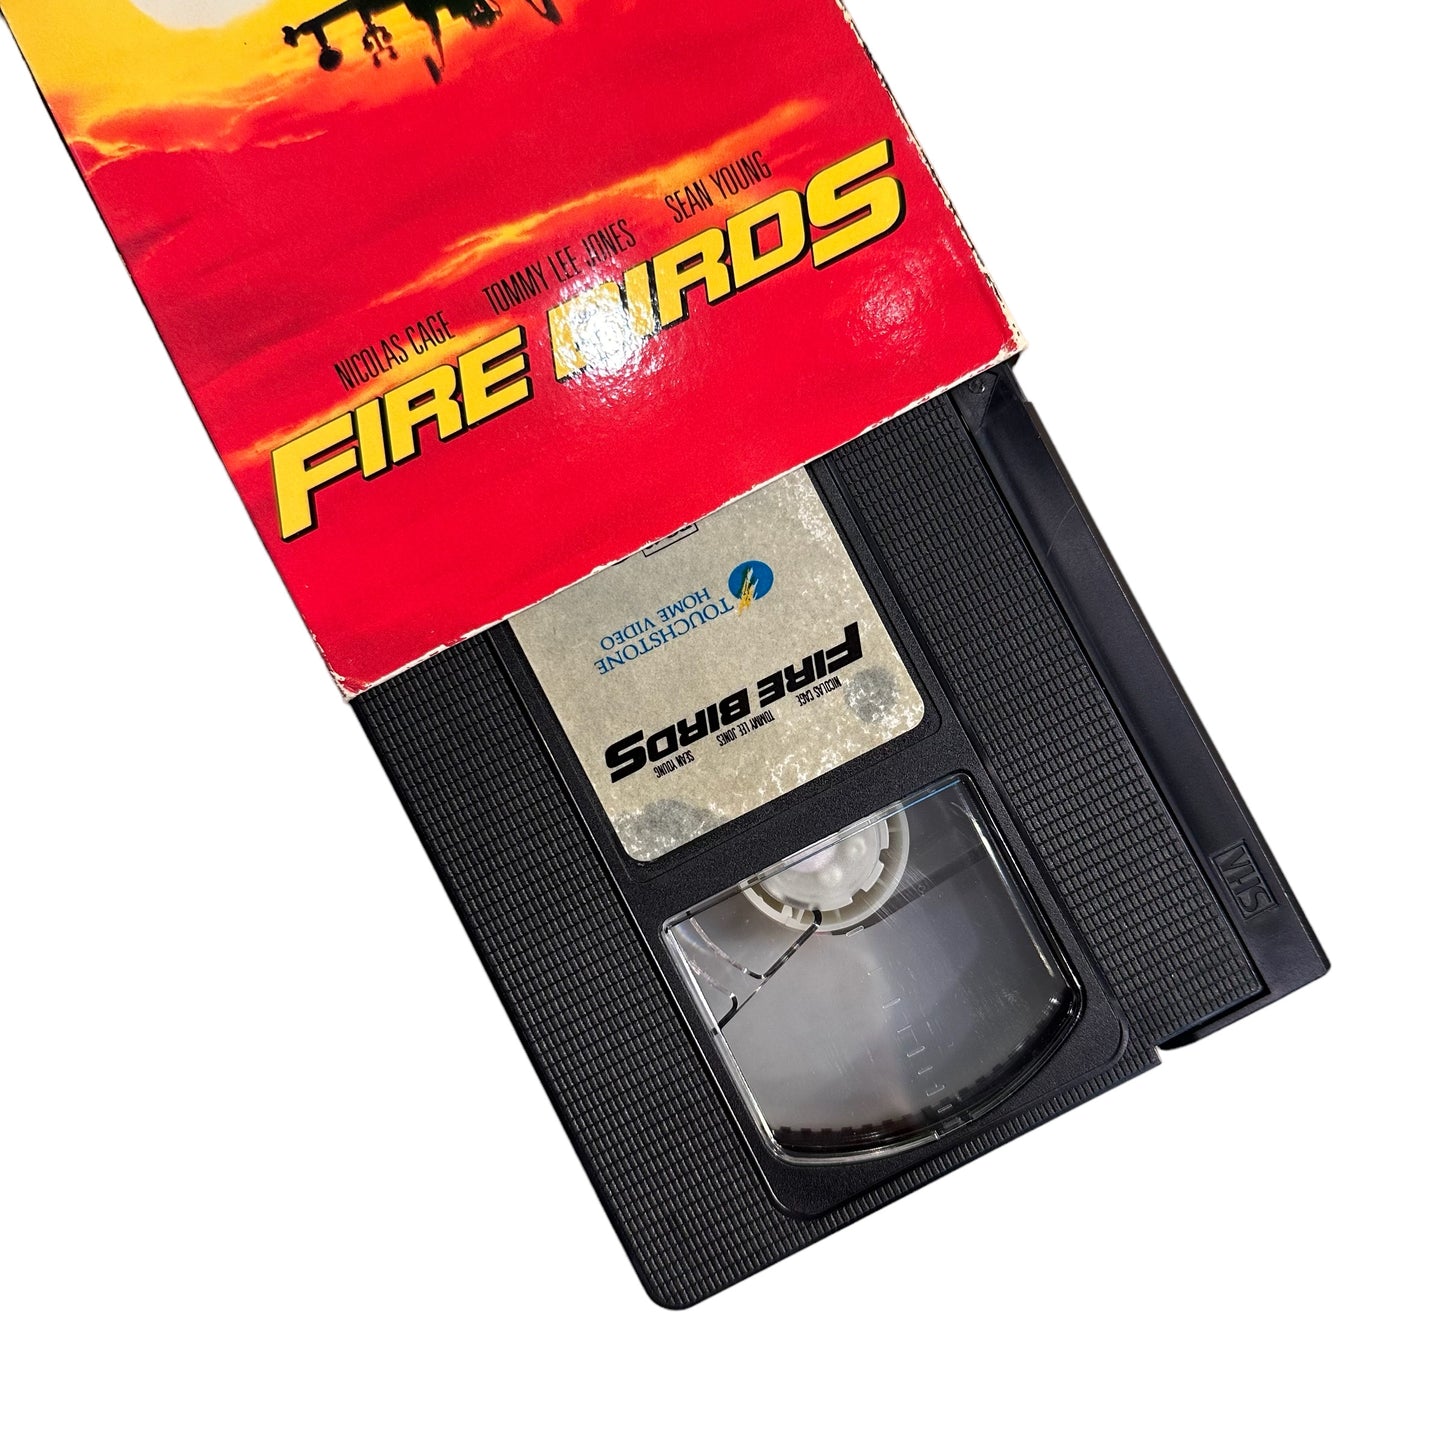 VHS ビデオテープ 輸入版 アパッチ  Fire Birds 海外版 USA アメリカ ヴィンテージ ビデオ 紙ジャケ